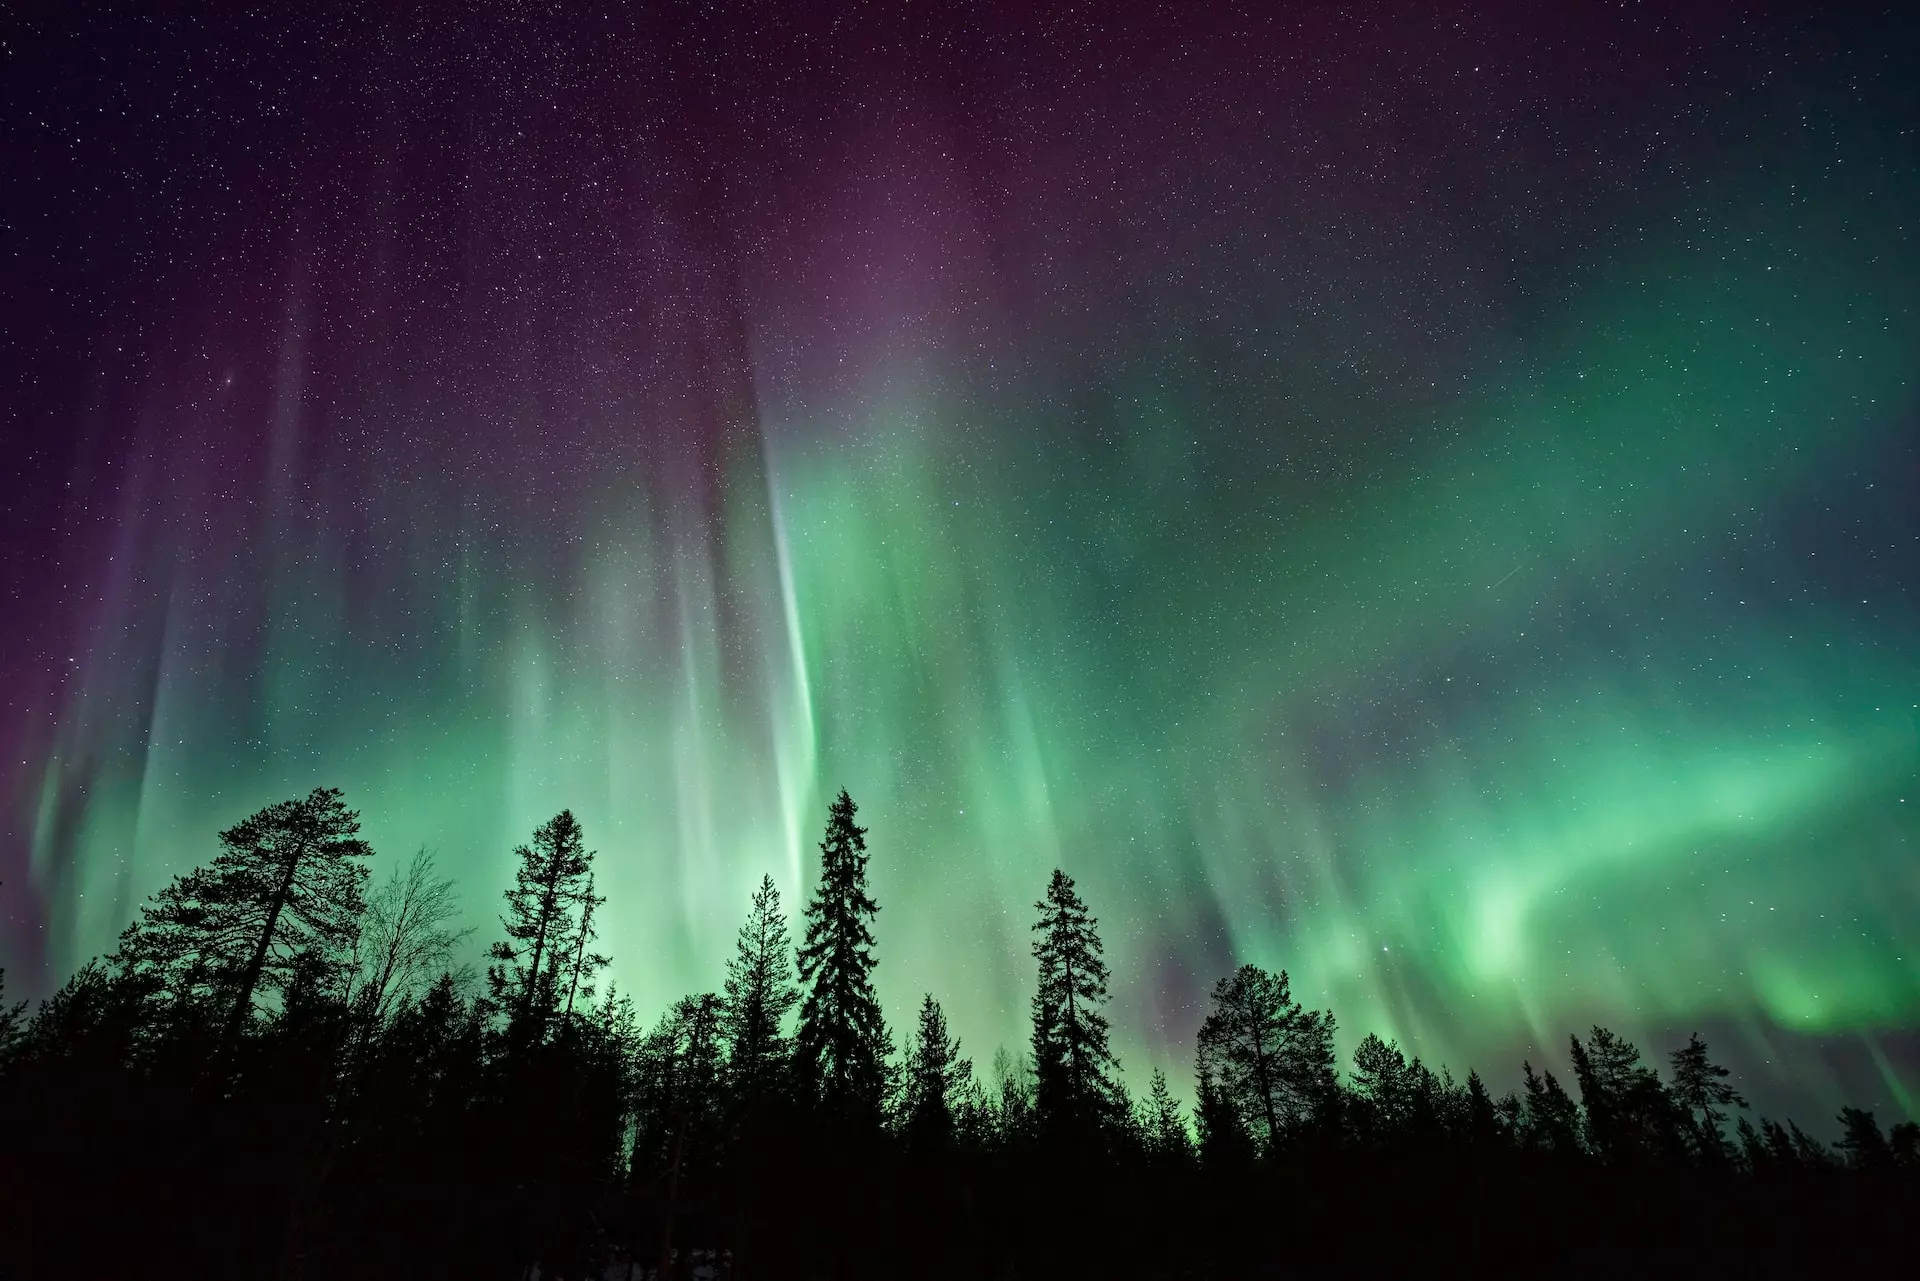 Pine trees silhouetted against aurora borealis